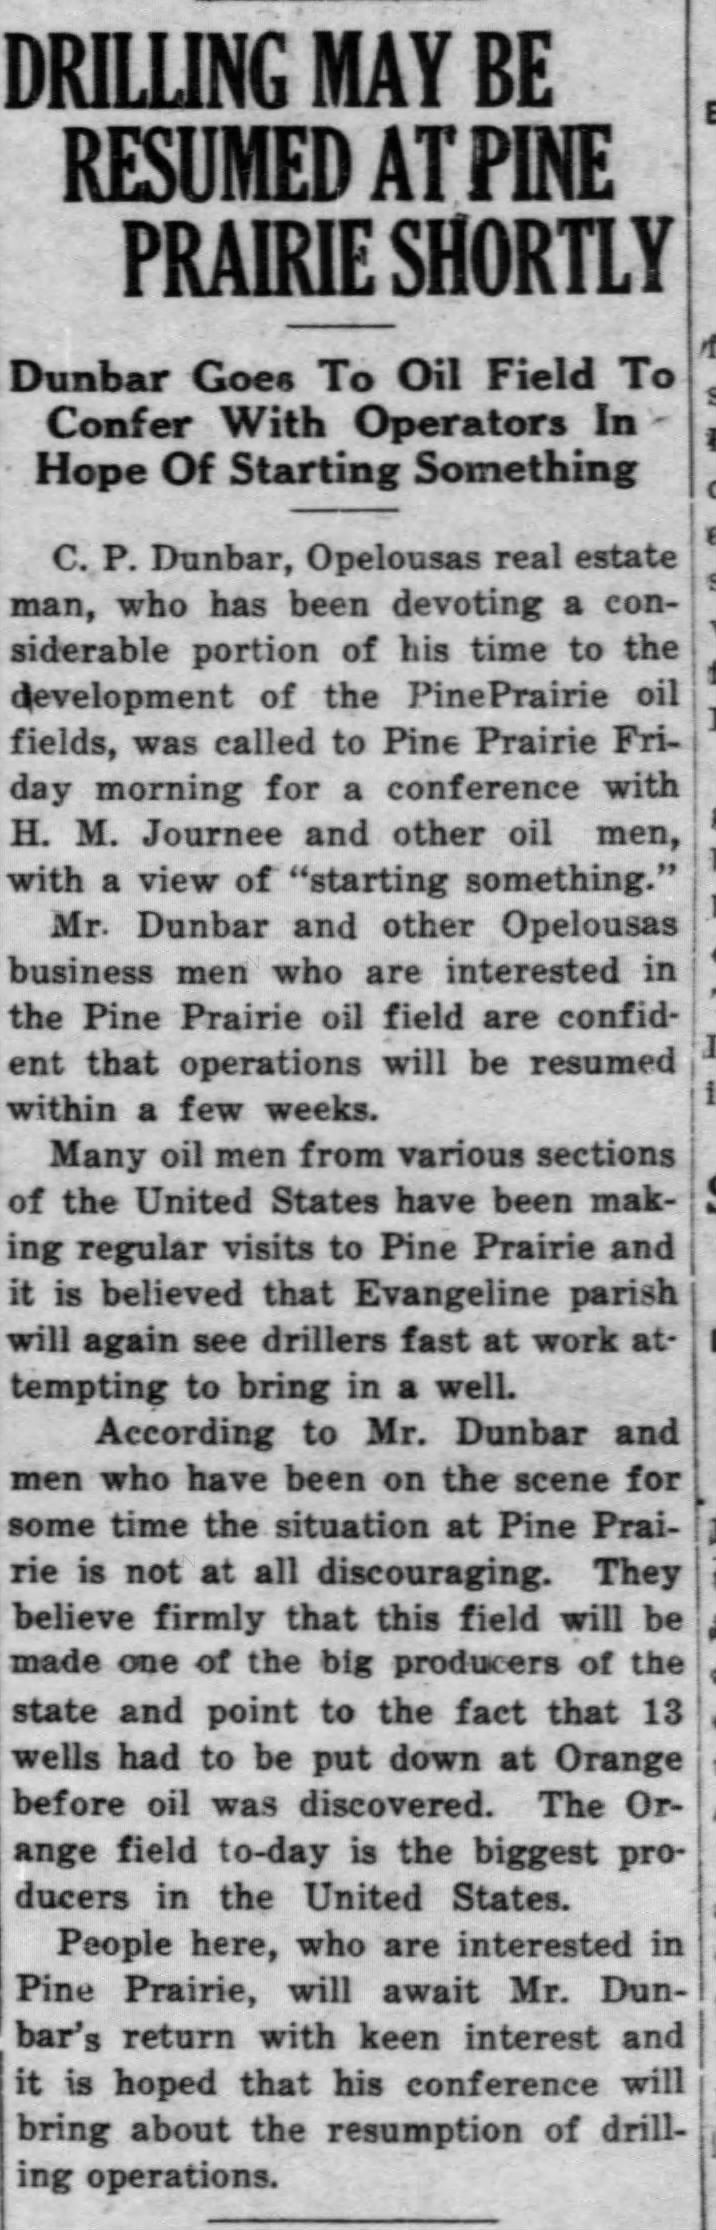 H.M. Journee wants to drill again at Pine Prairie 1922